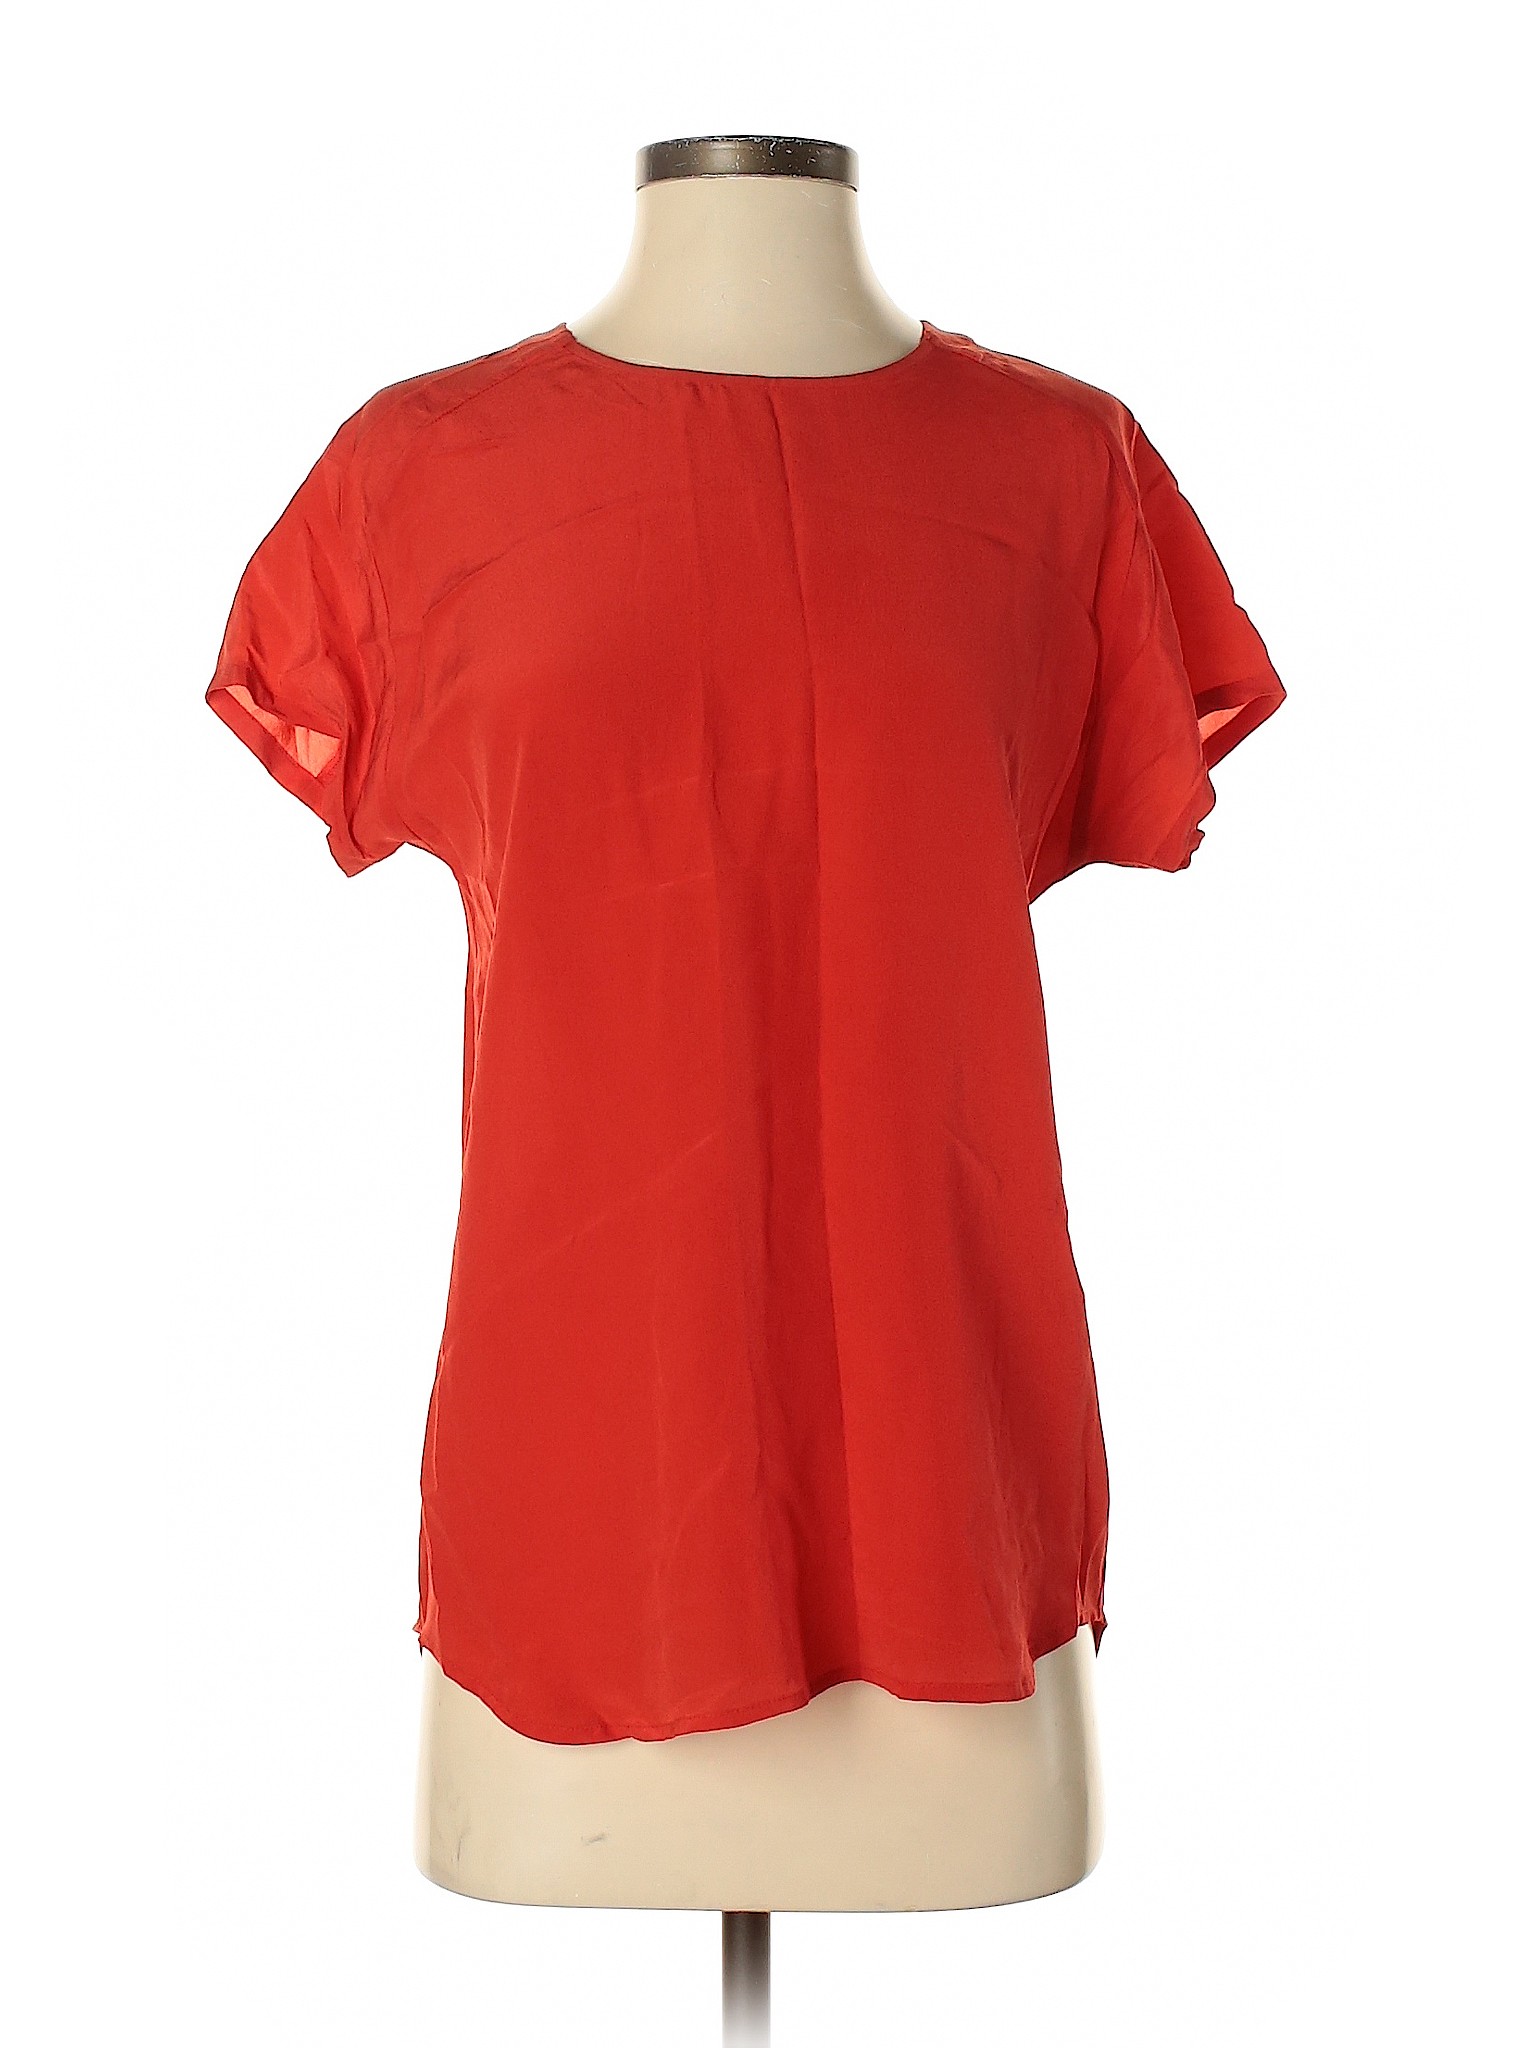 Broadway & Broome Women Red Short Sleeve Blouse XS | eBay